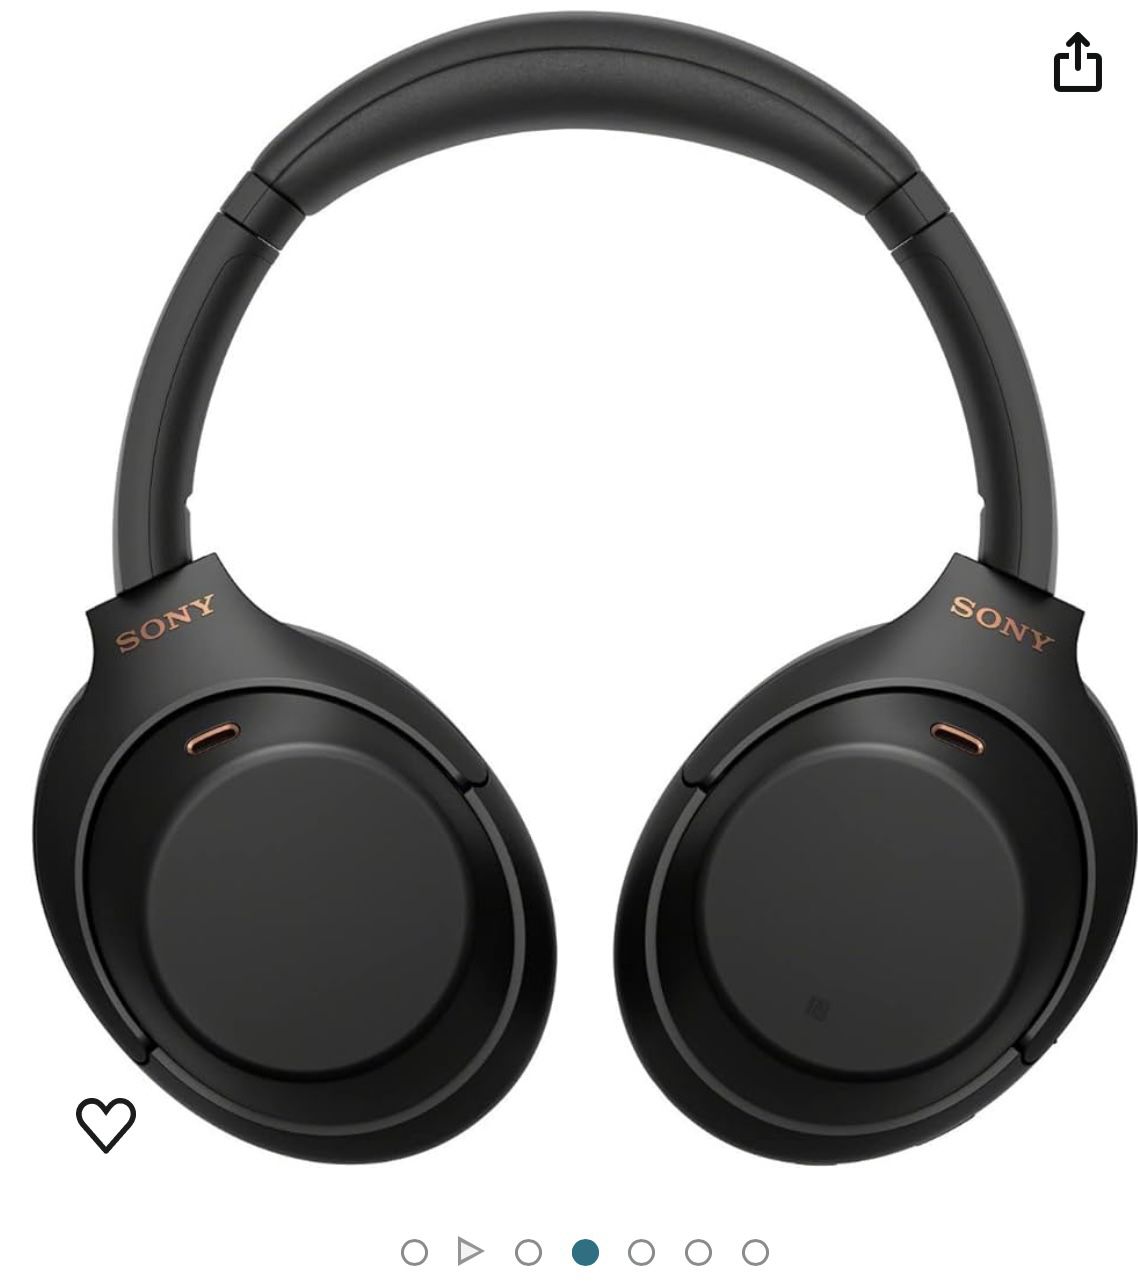 SONY WH1000XM3 Bluetooth Wireless Noise Canceling Headphones, Black